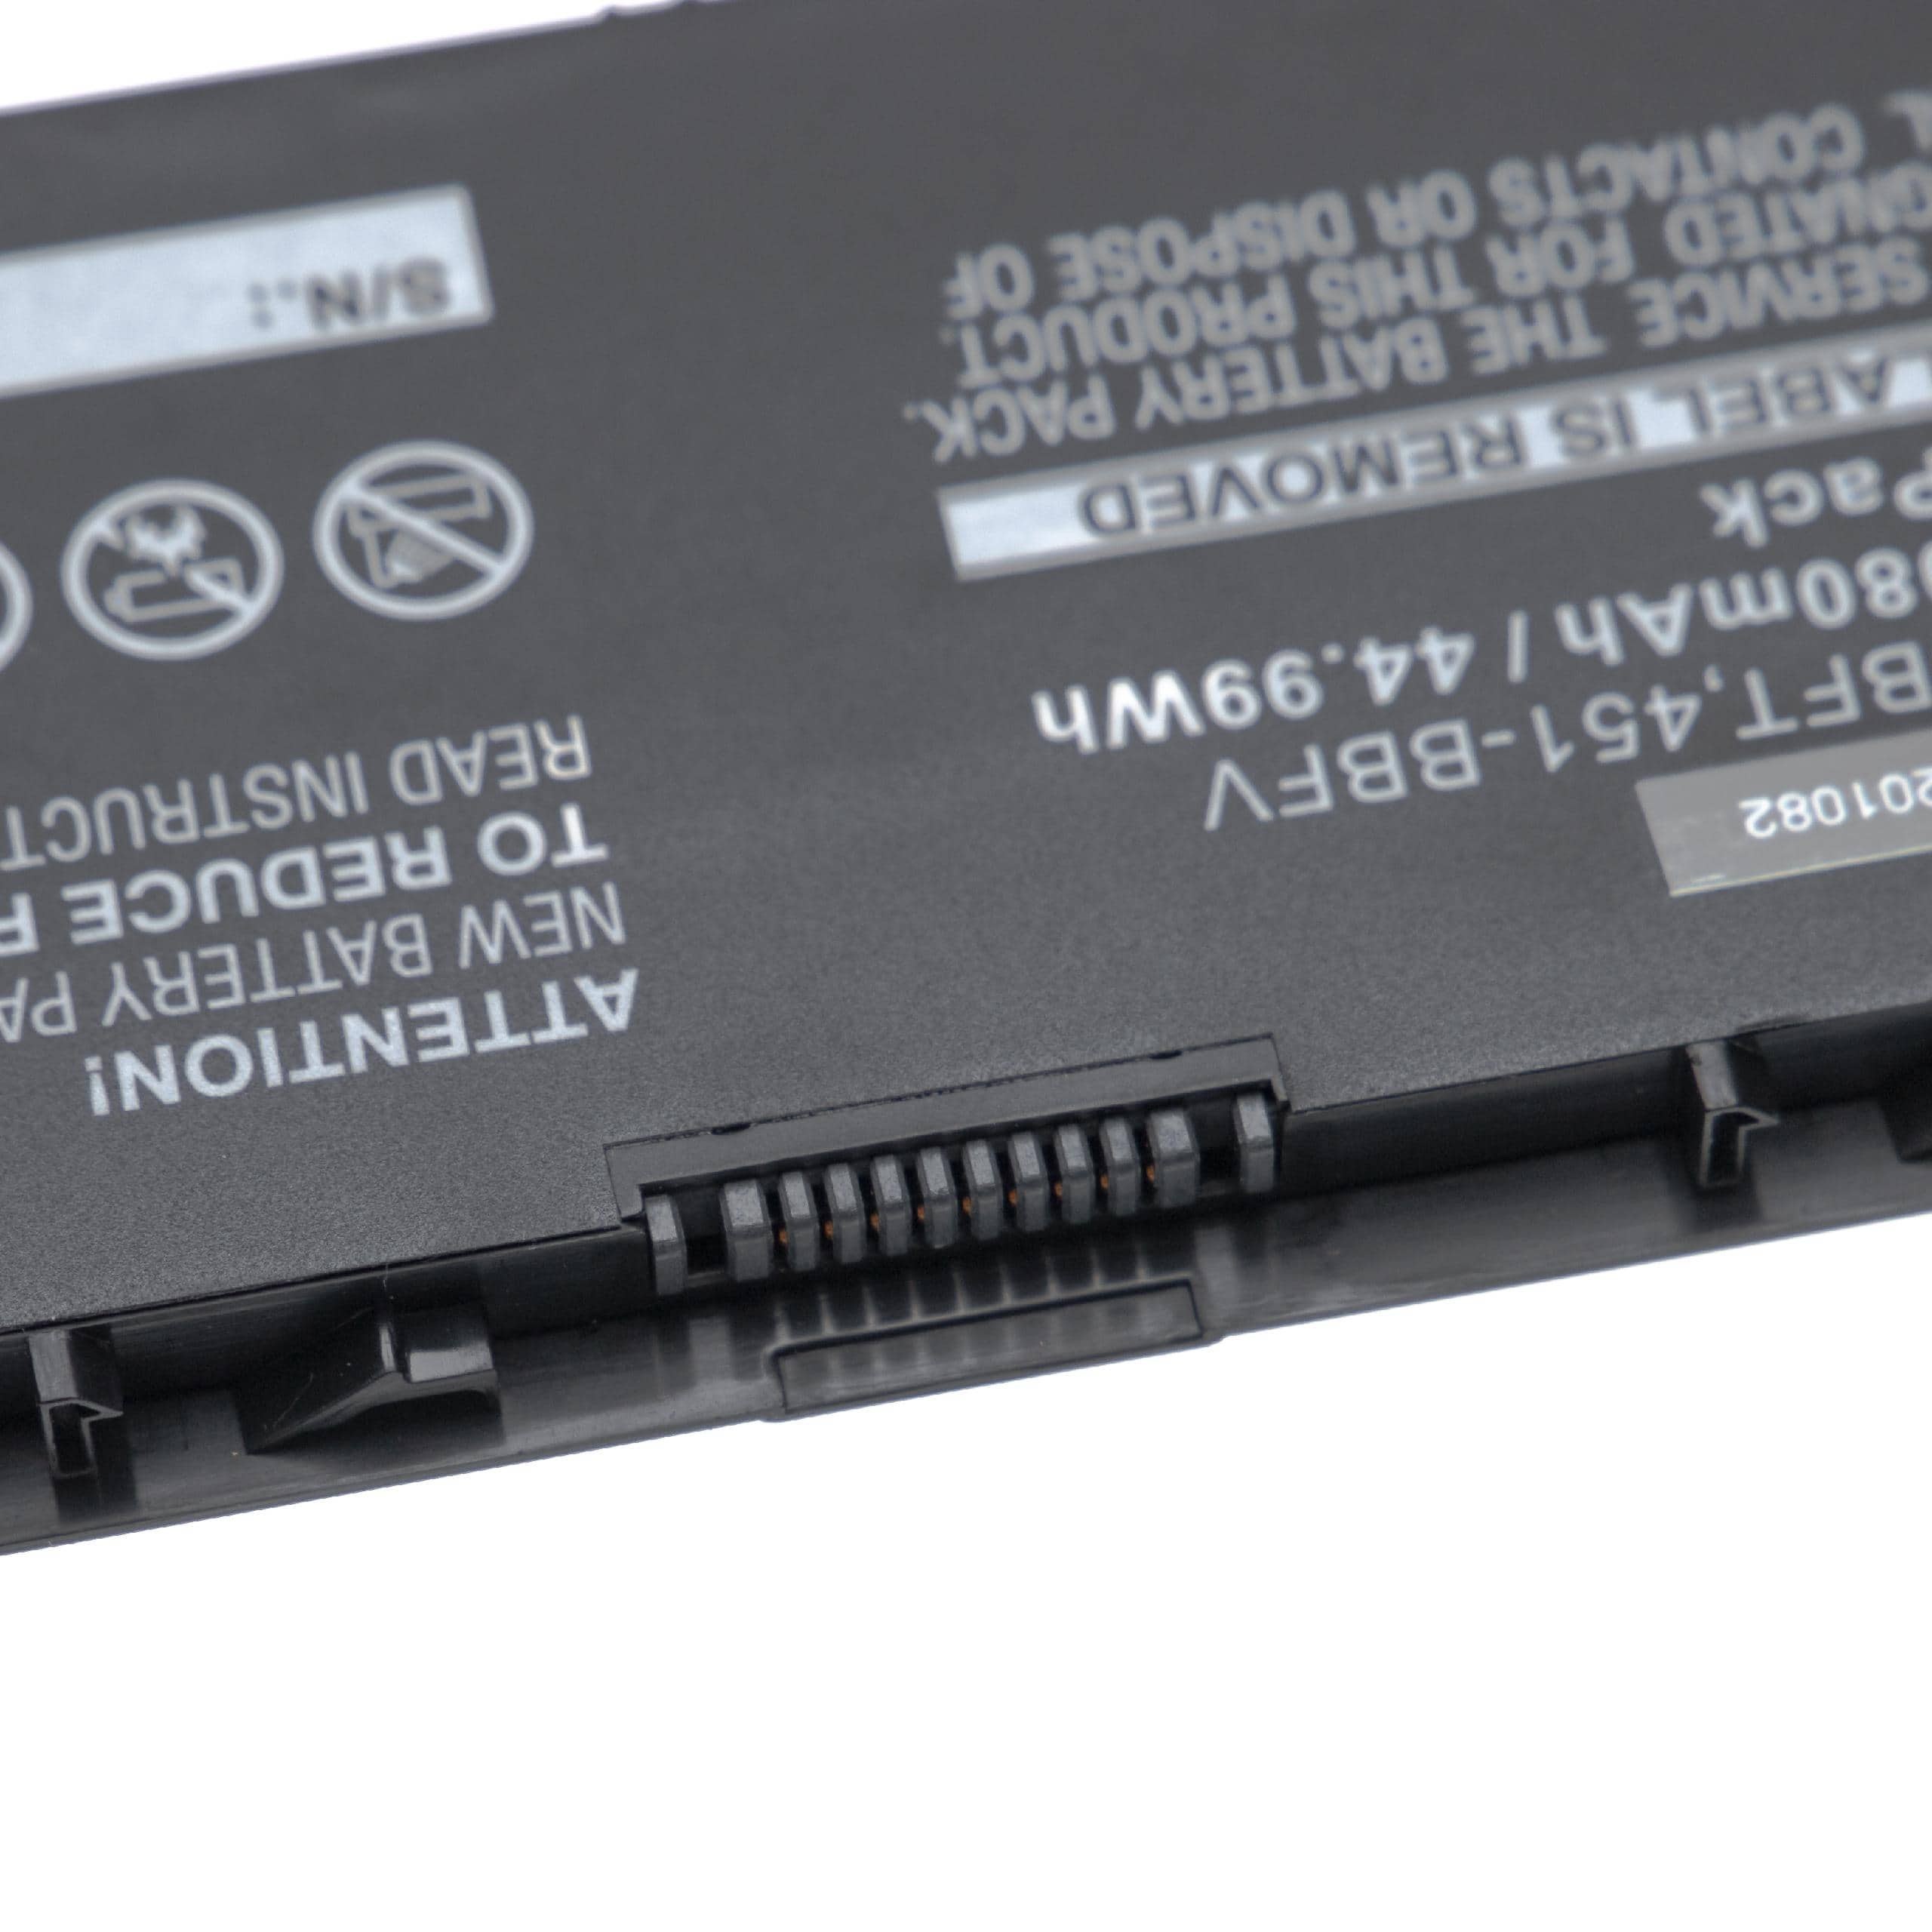 Akumulator do laptopa zamiennik Dell PFXCR, F38HT, 451-BBFY, 34GKR, 451-BBFT - 6080 mAh 7,4 V Li-Ion, czarny